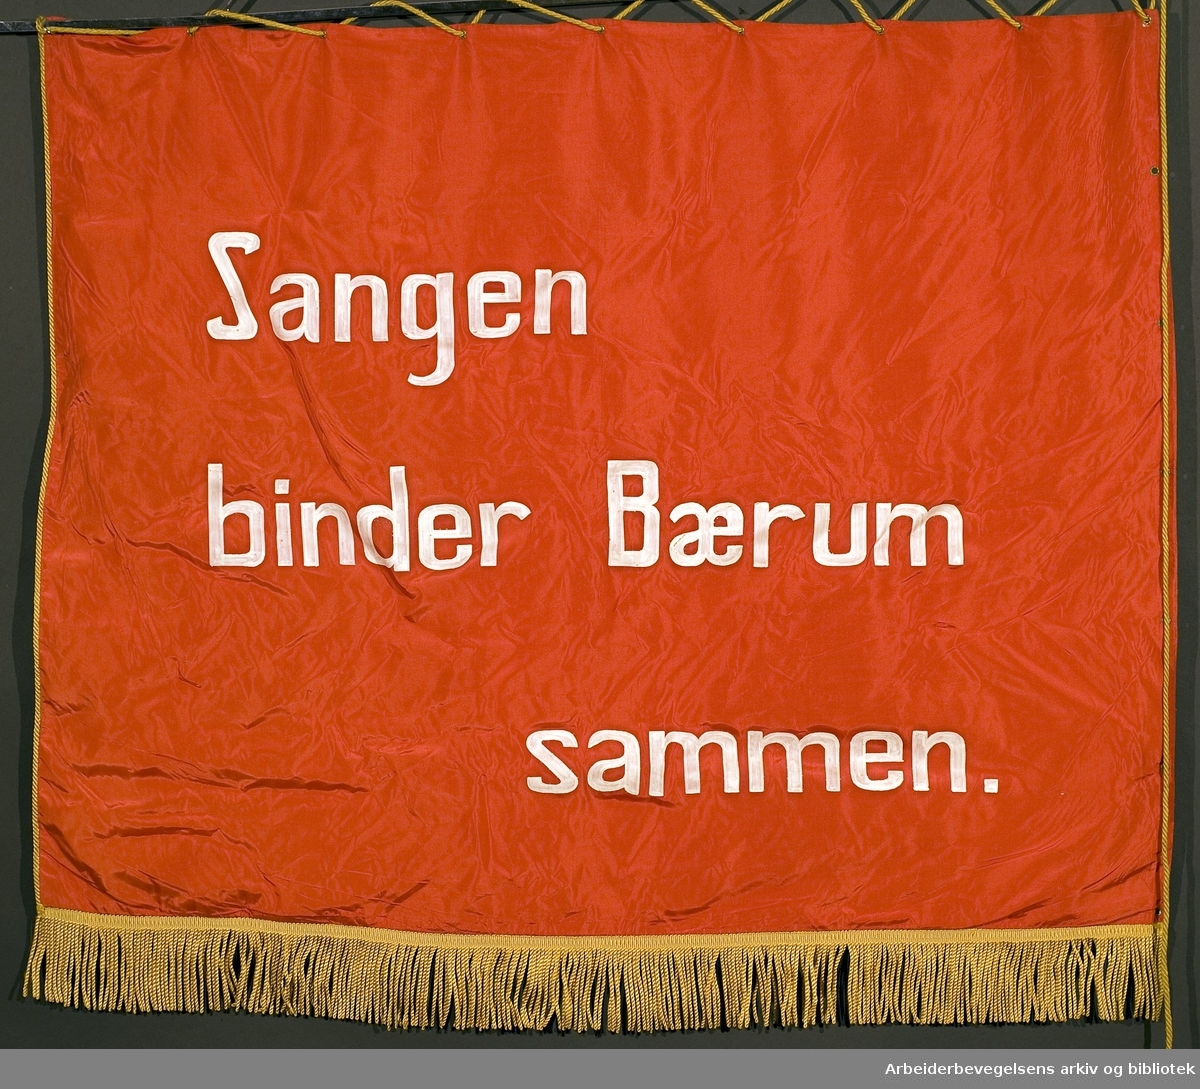 Bærum arbeiderpartis kor.Stiftet 16. september 1951..Bakside..Fanetekst: Sangen binder Bærum sammen...